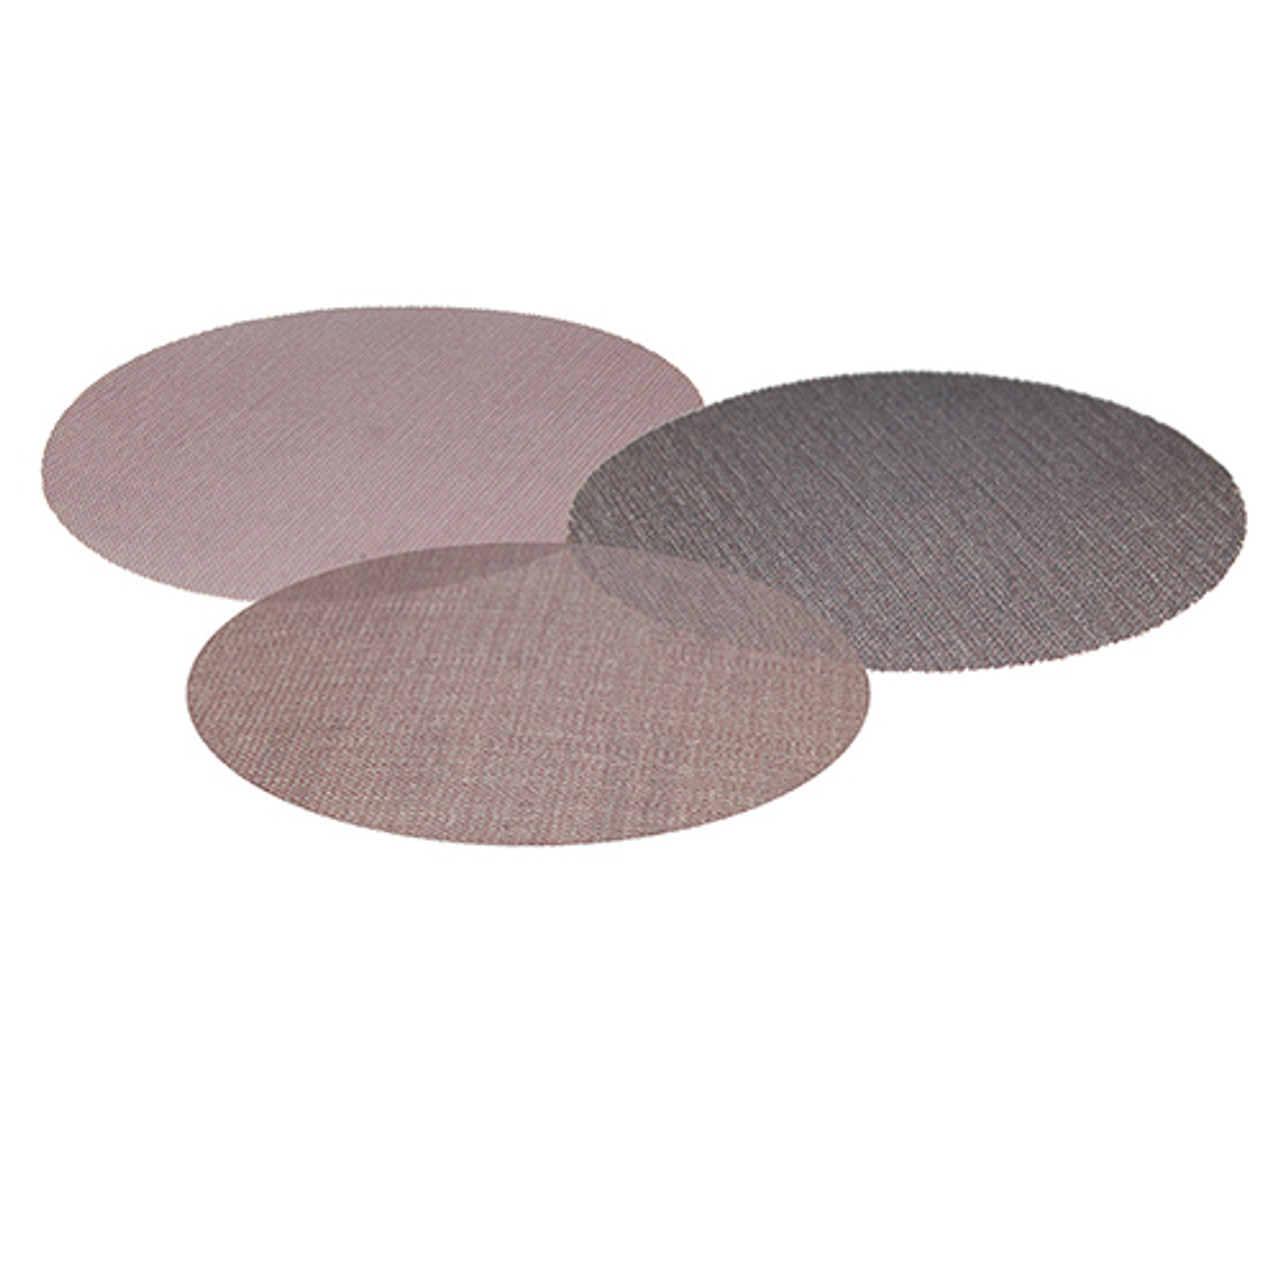 Klingspor Abrasives Klingnet, 120 Grit, Aluminum Oxide, Hook & Loop, 6" Discs, 25pk